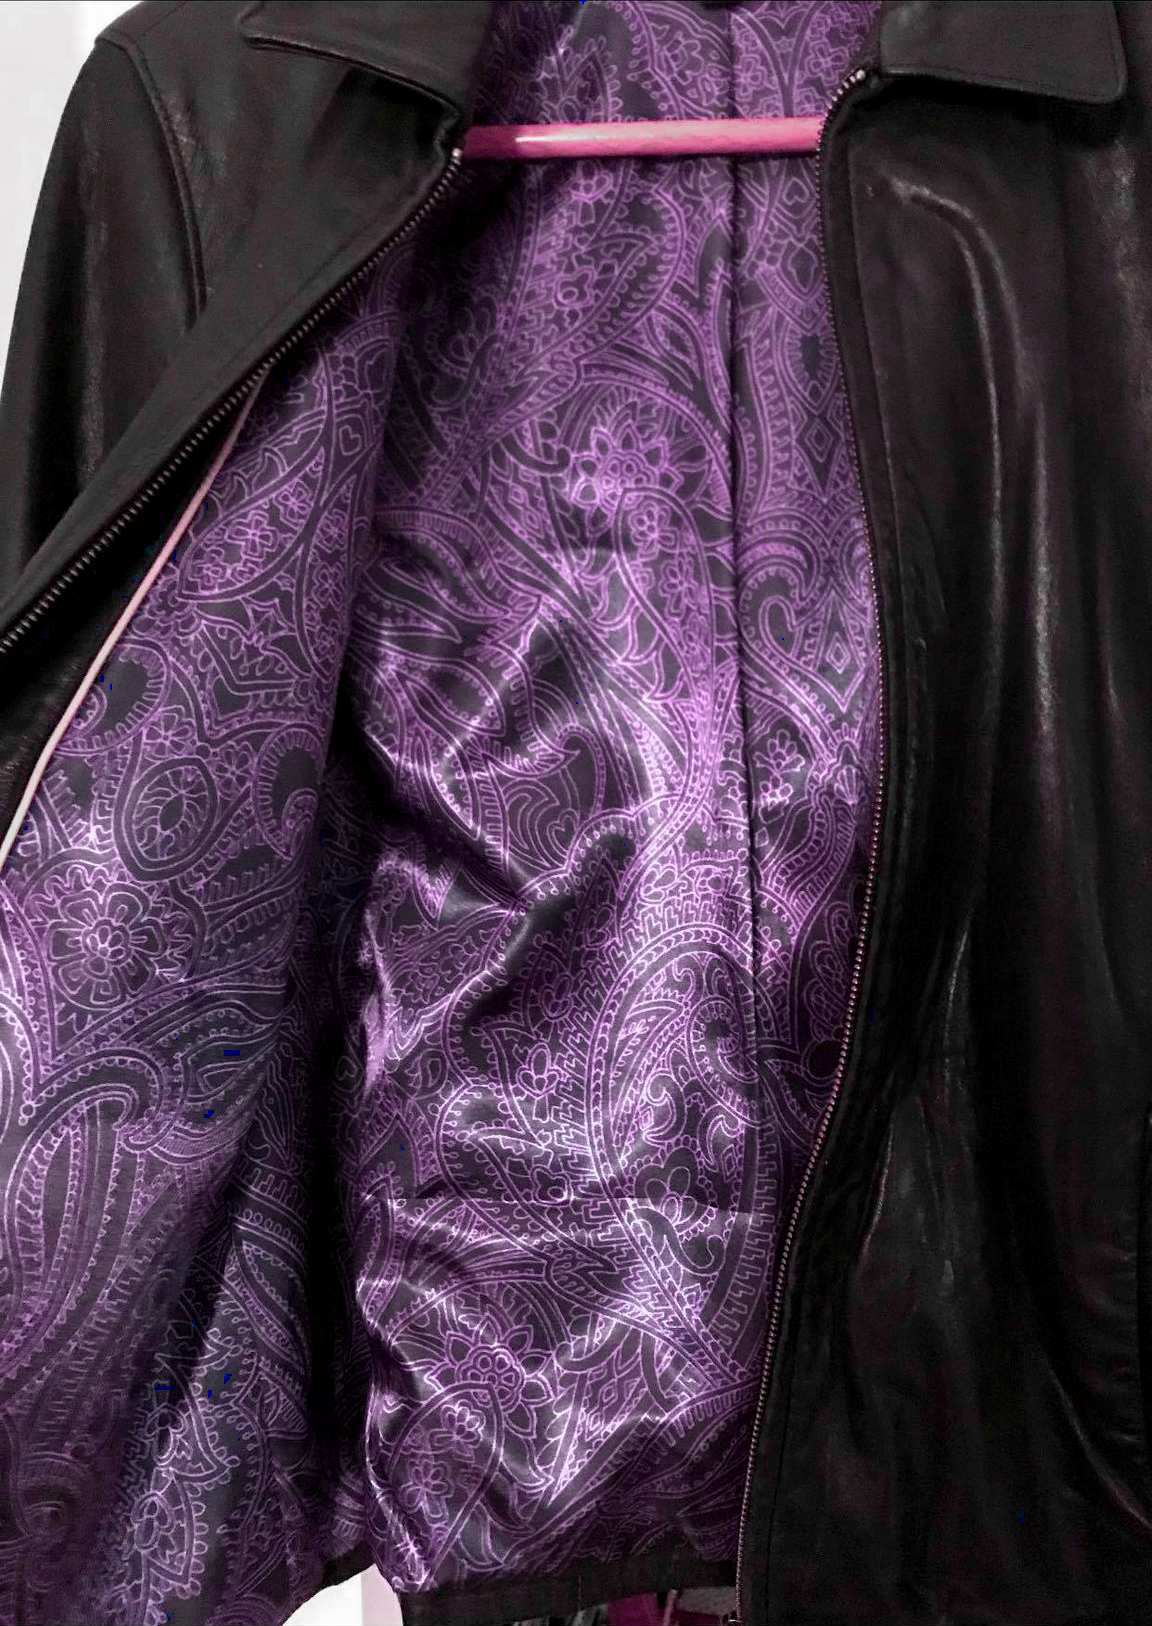 Prince-themed jacket lining – Paisley Power